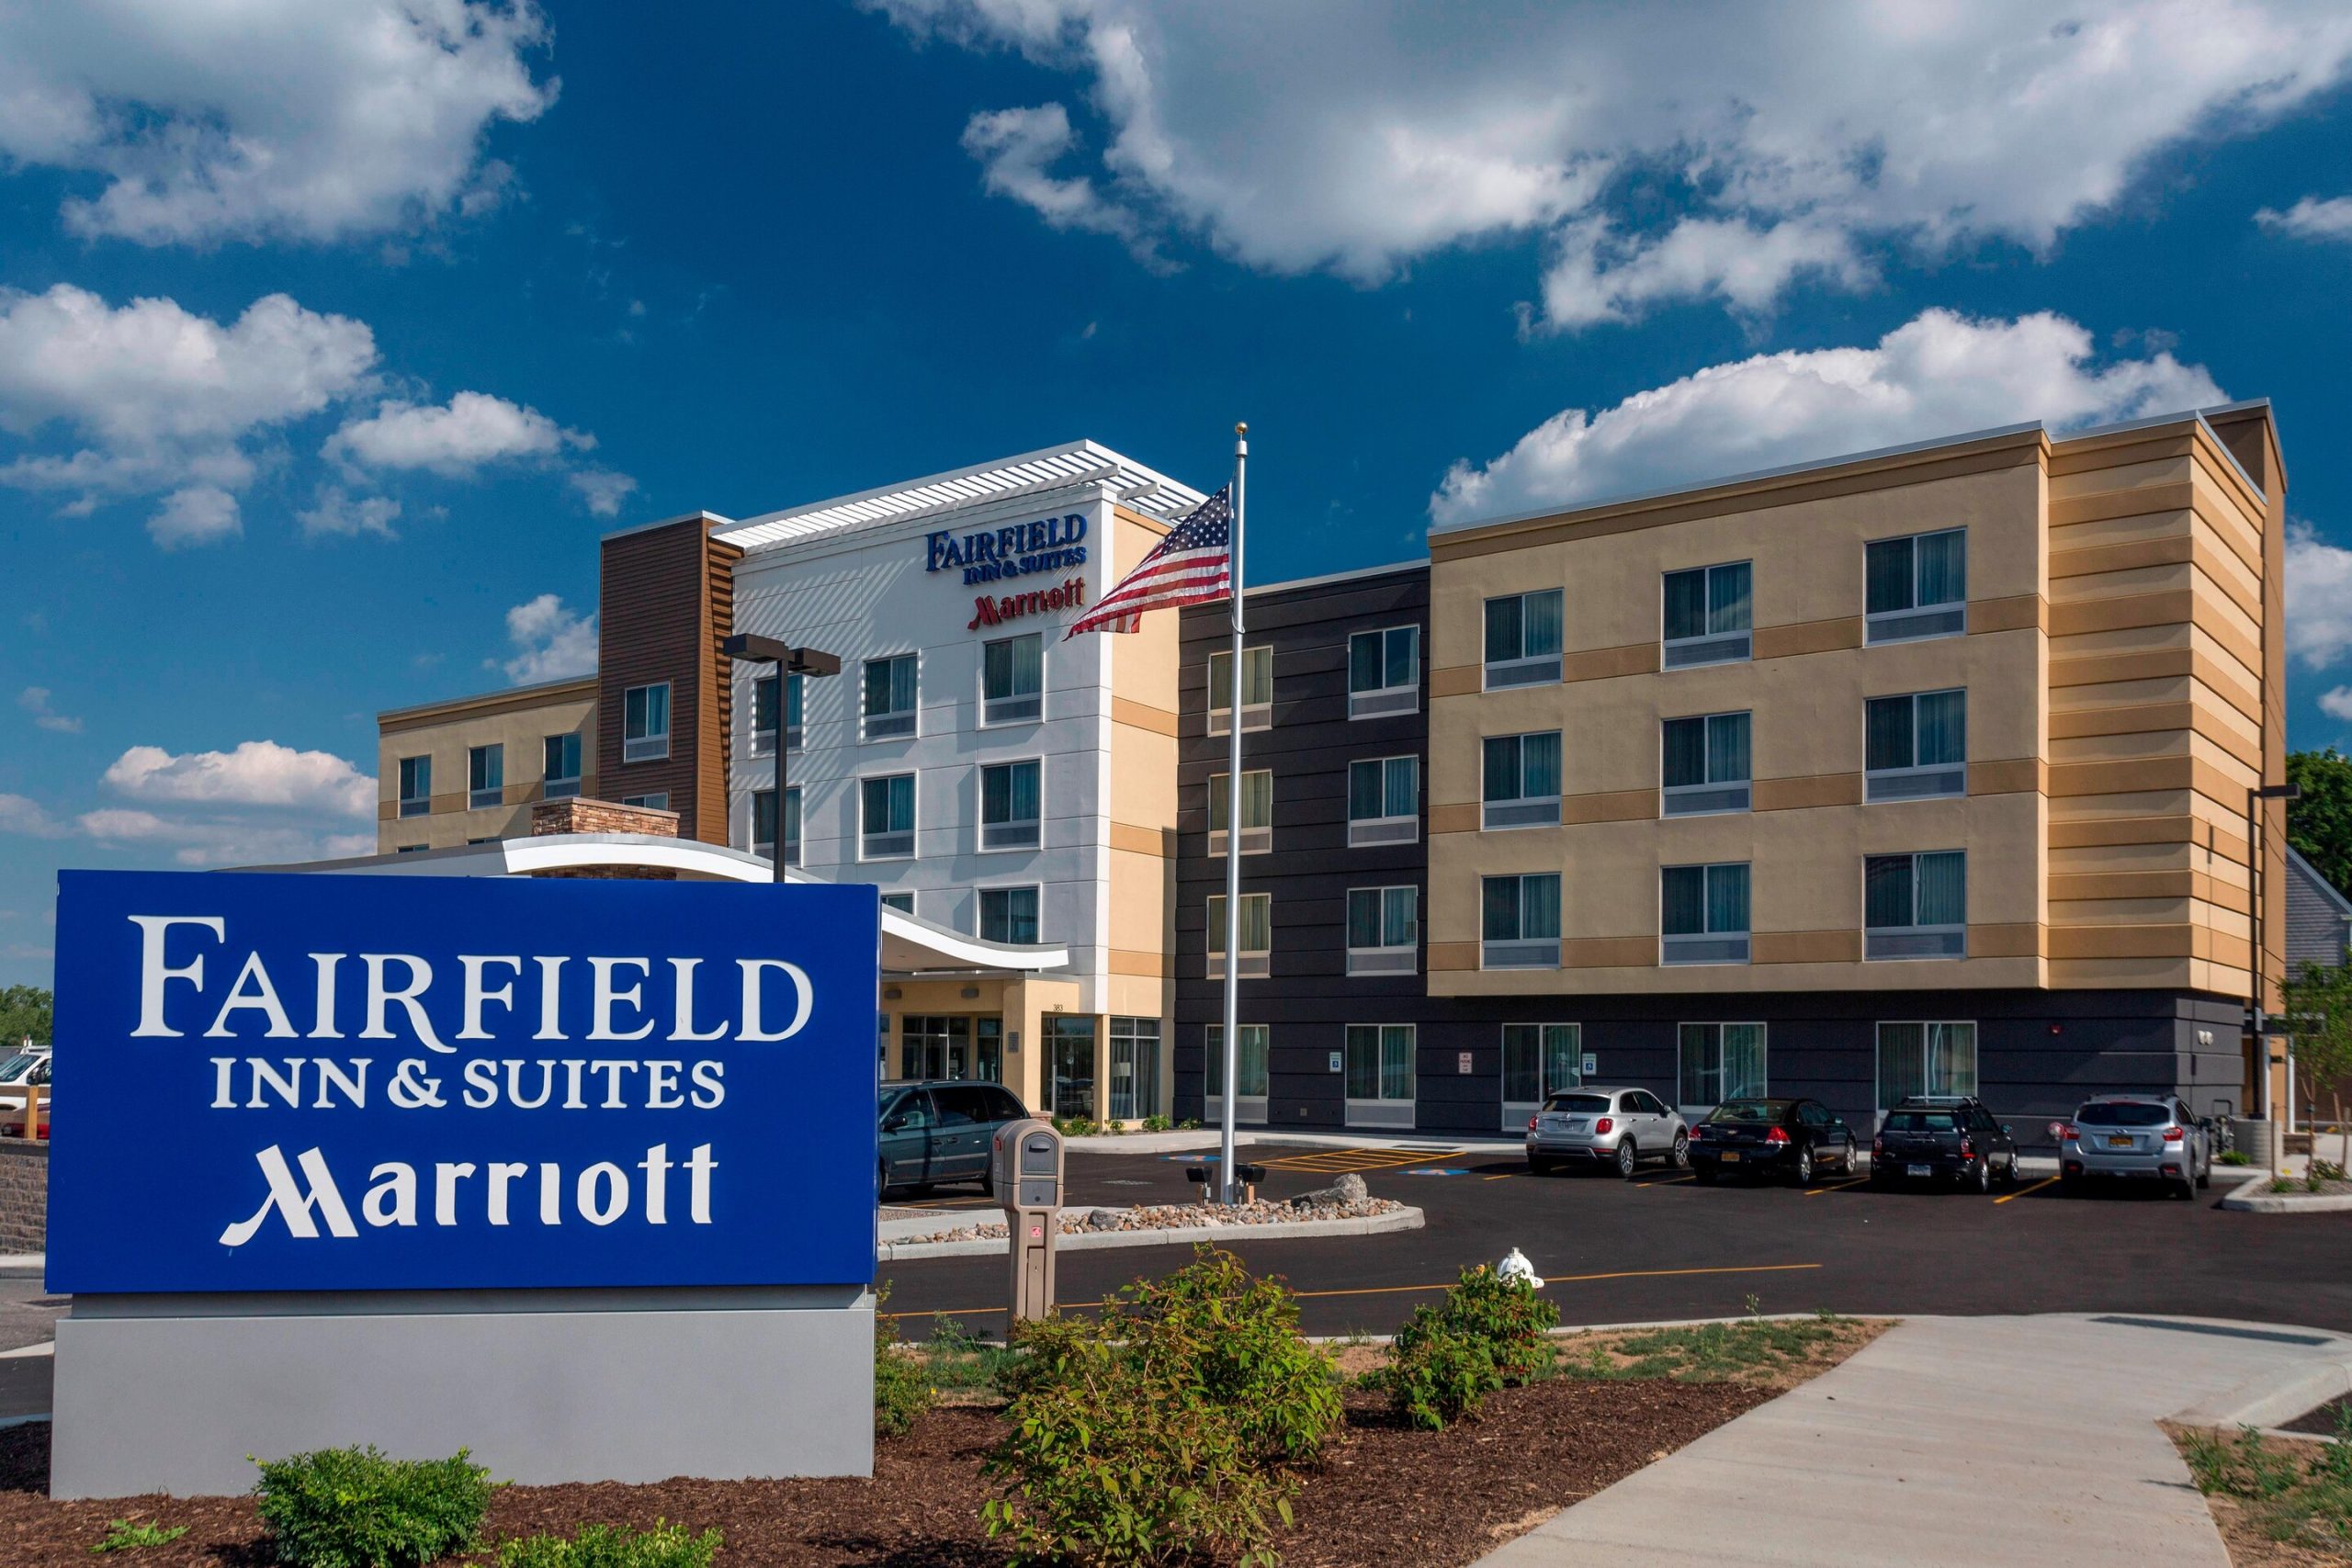 Fairfield Inn & Suites, Geneva, NY